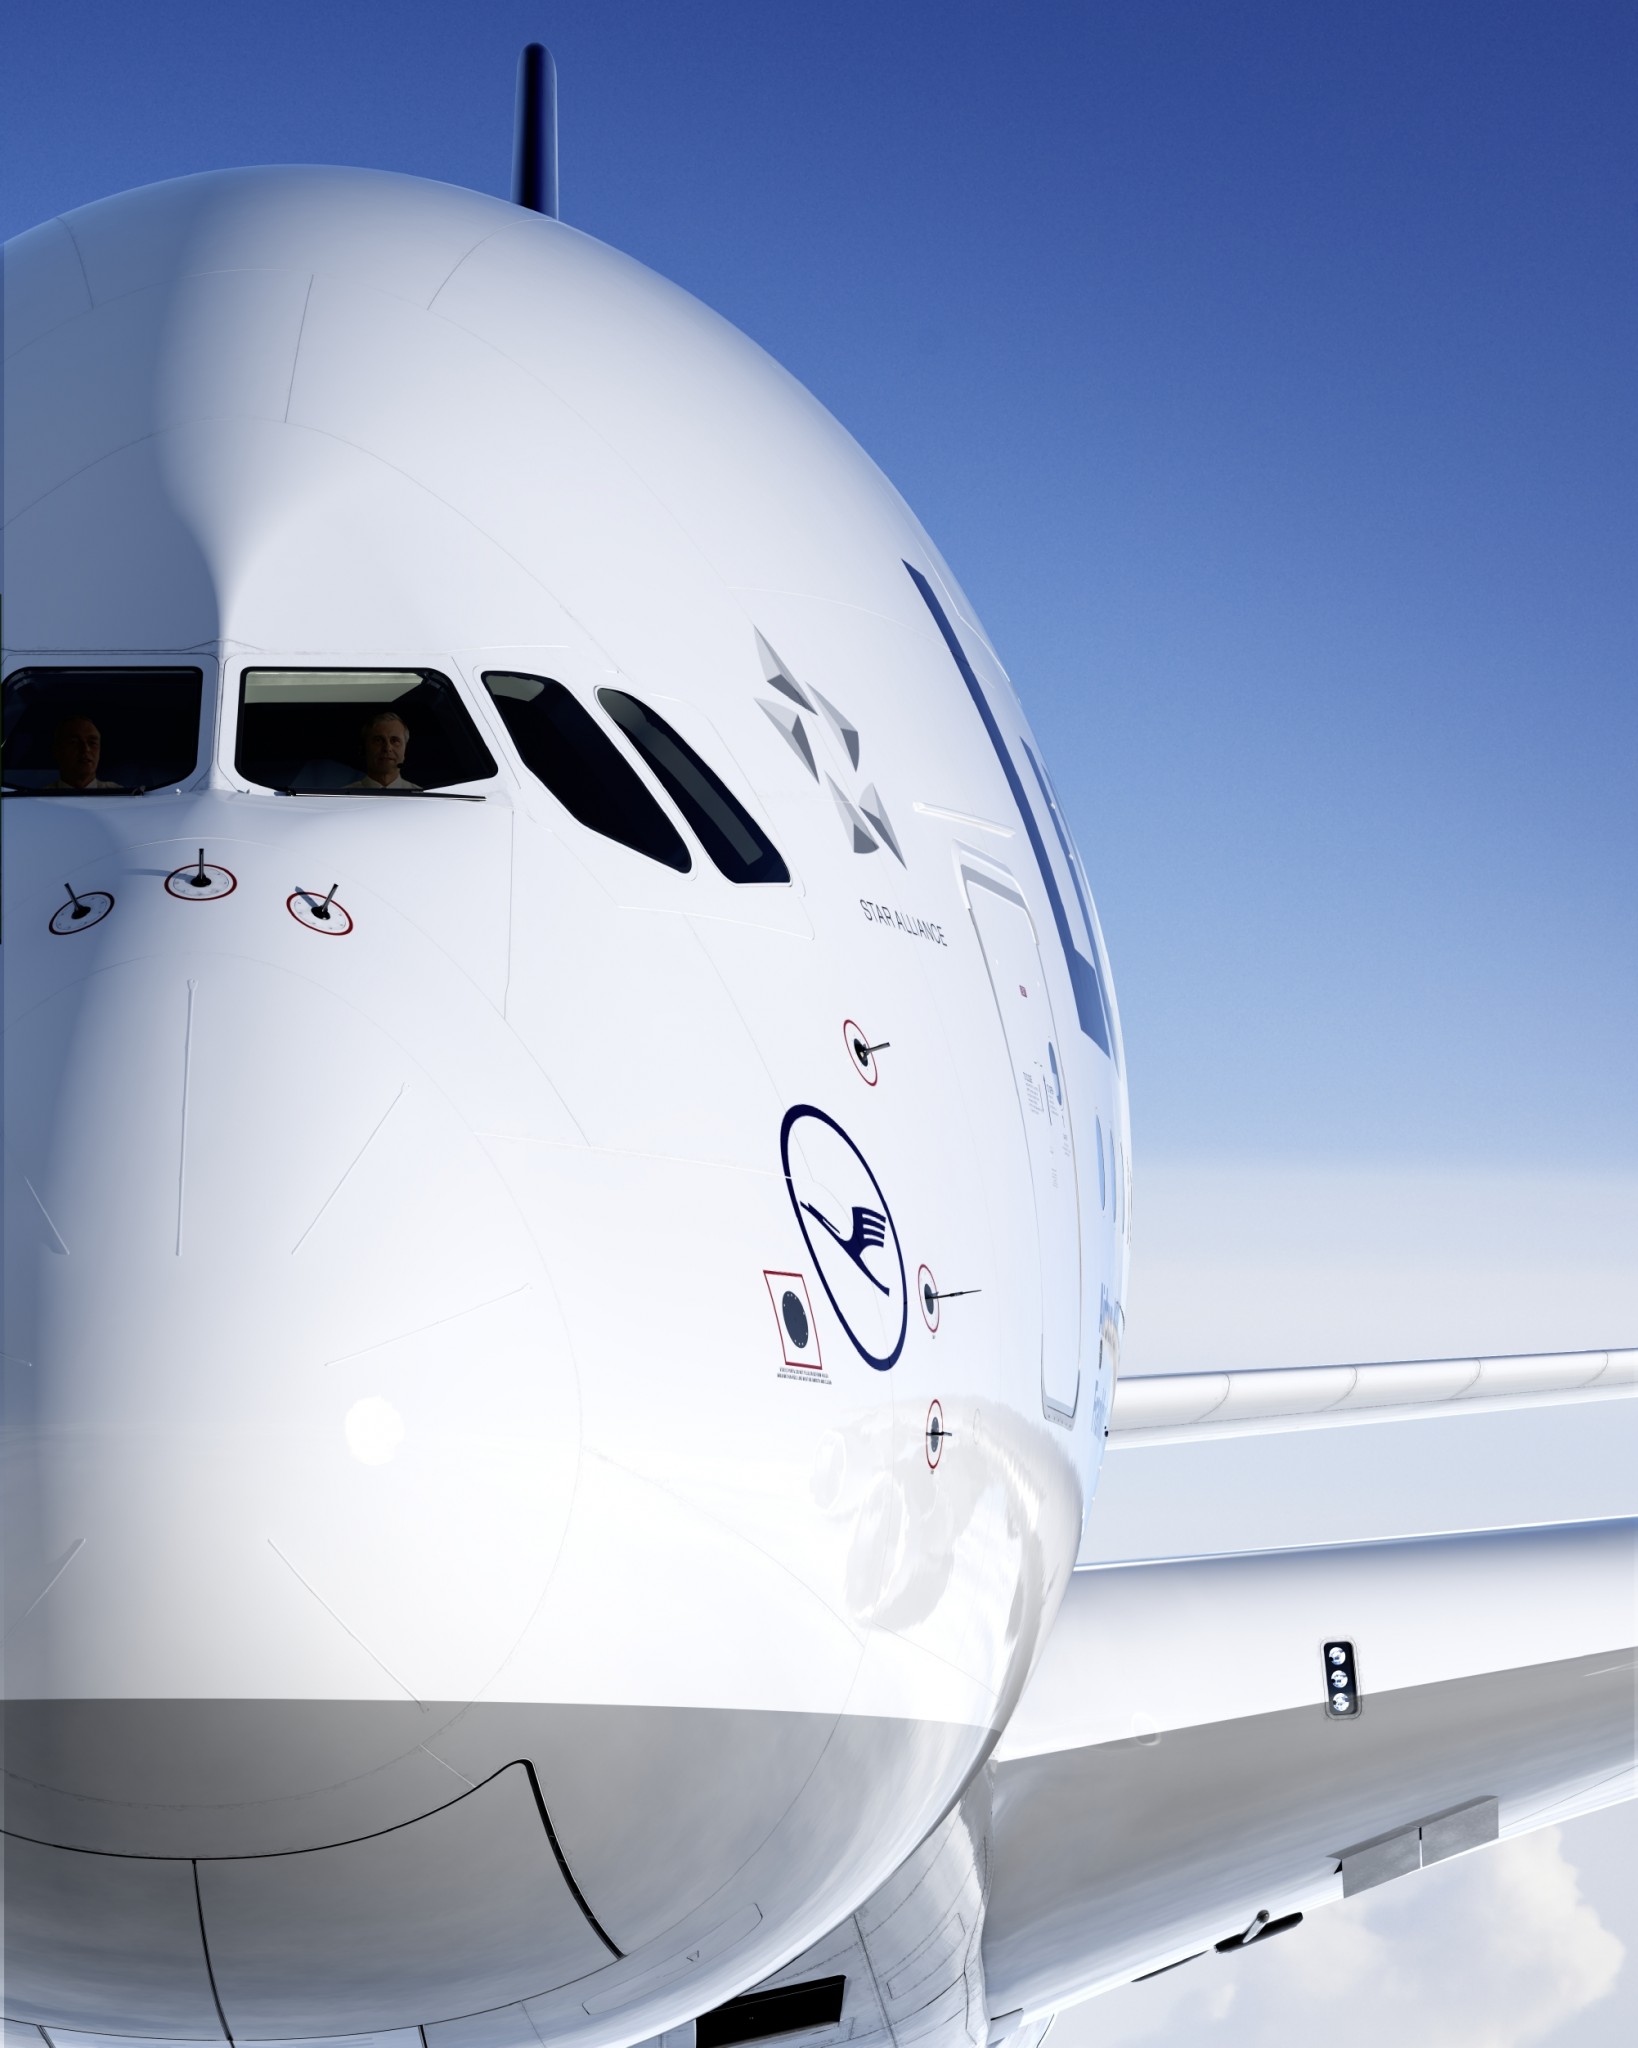 AMST-Aviation and Lufthansa Aviation Training Enter Partnership Agreement